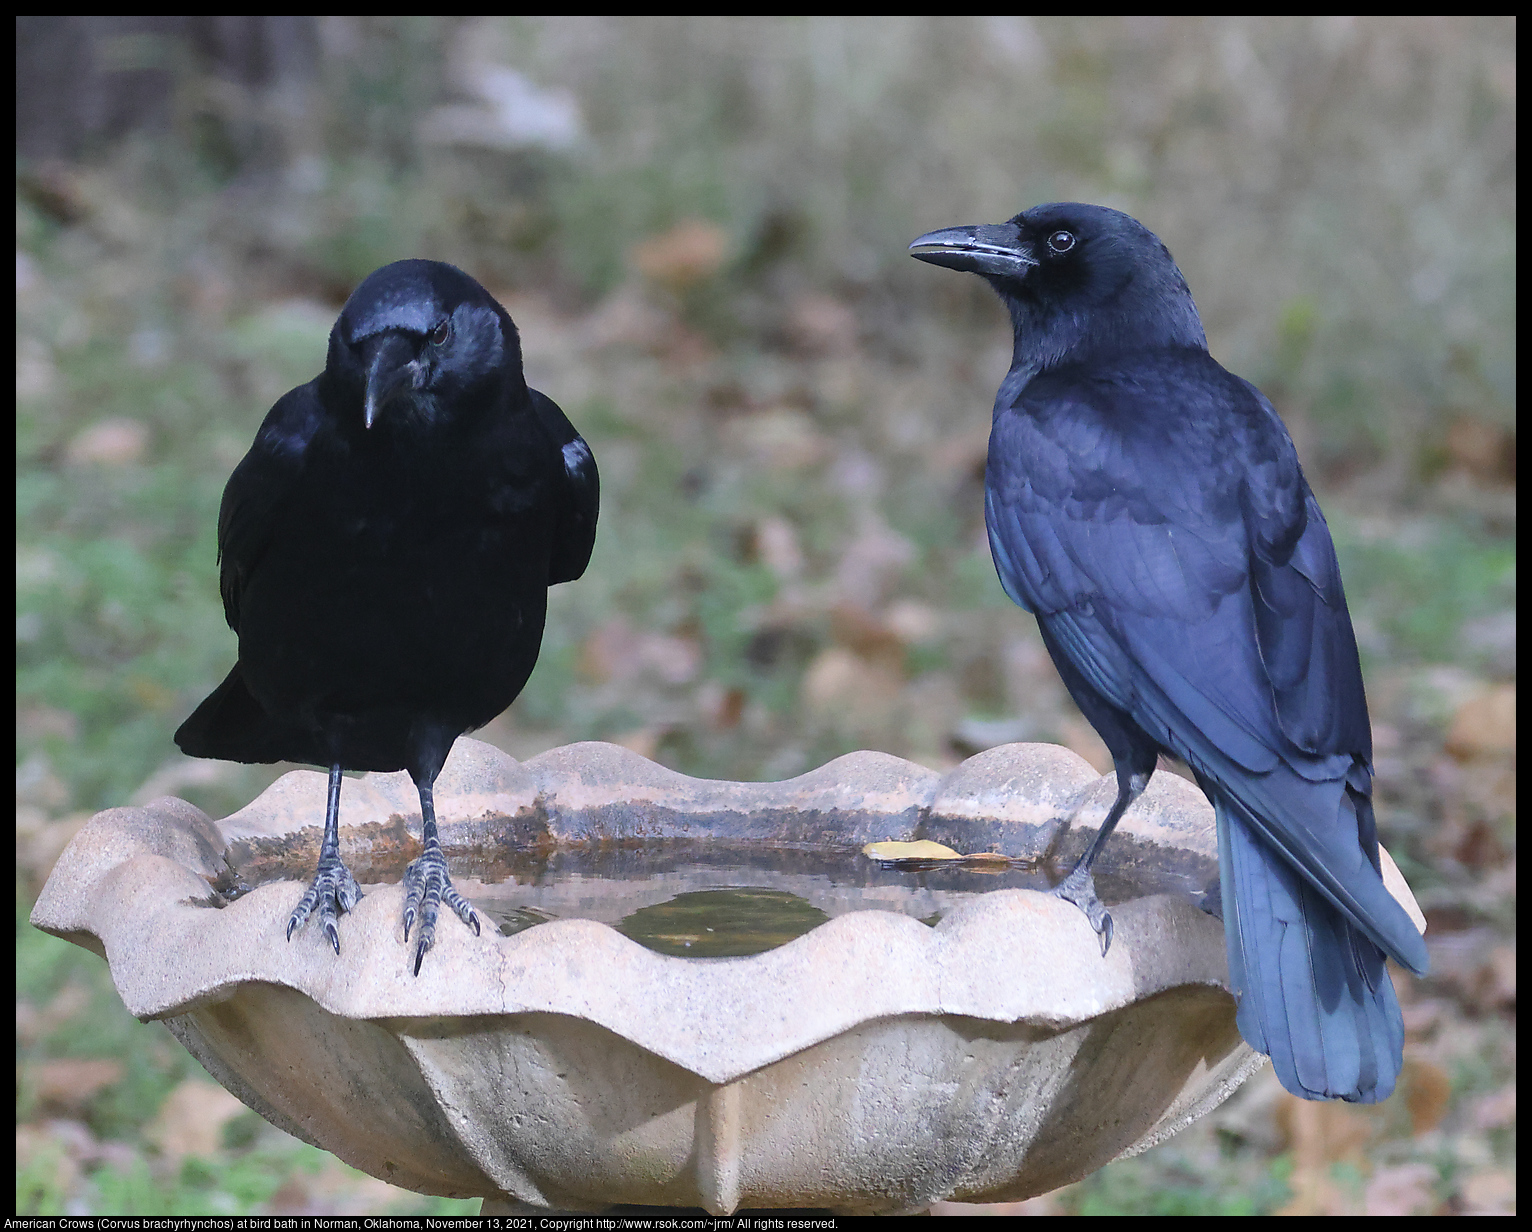 American Crows (Corvus brachyrhynchos) at bird bath in Norman, Oklahoma, November 13, 2021